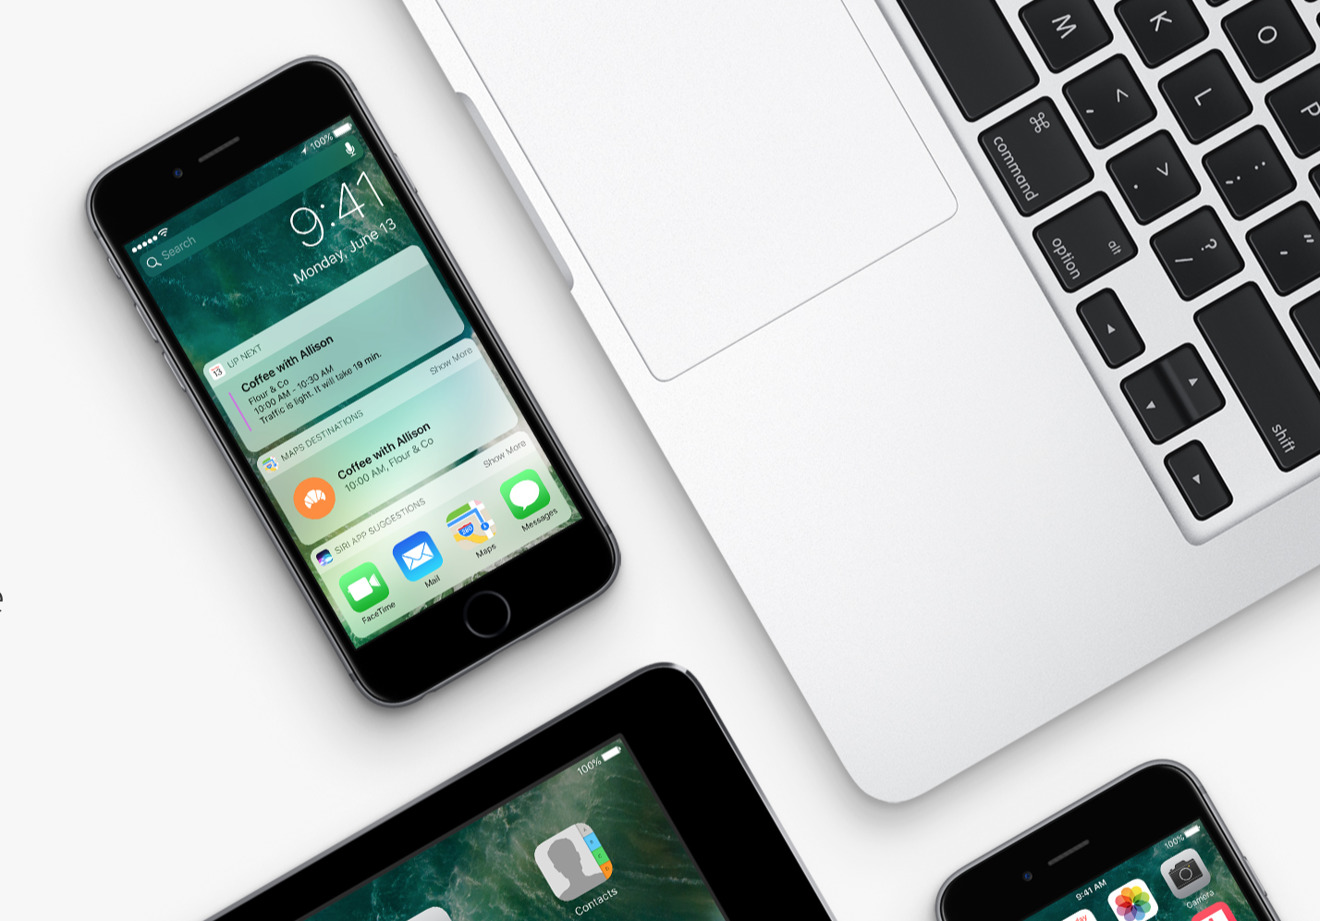 Apple issues new public & developer iOS 10.2, macOS 10.12.2 betas, plus dev-only watchOS 3.1.1 beta